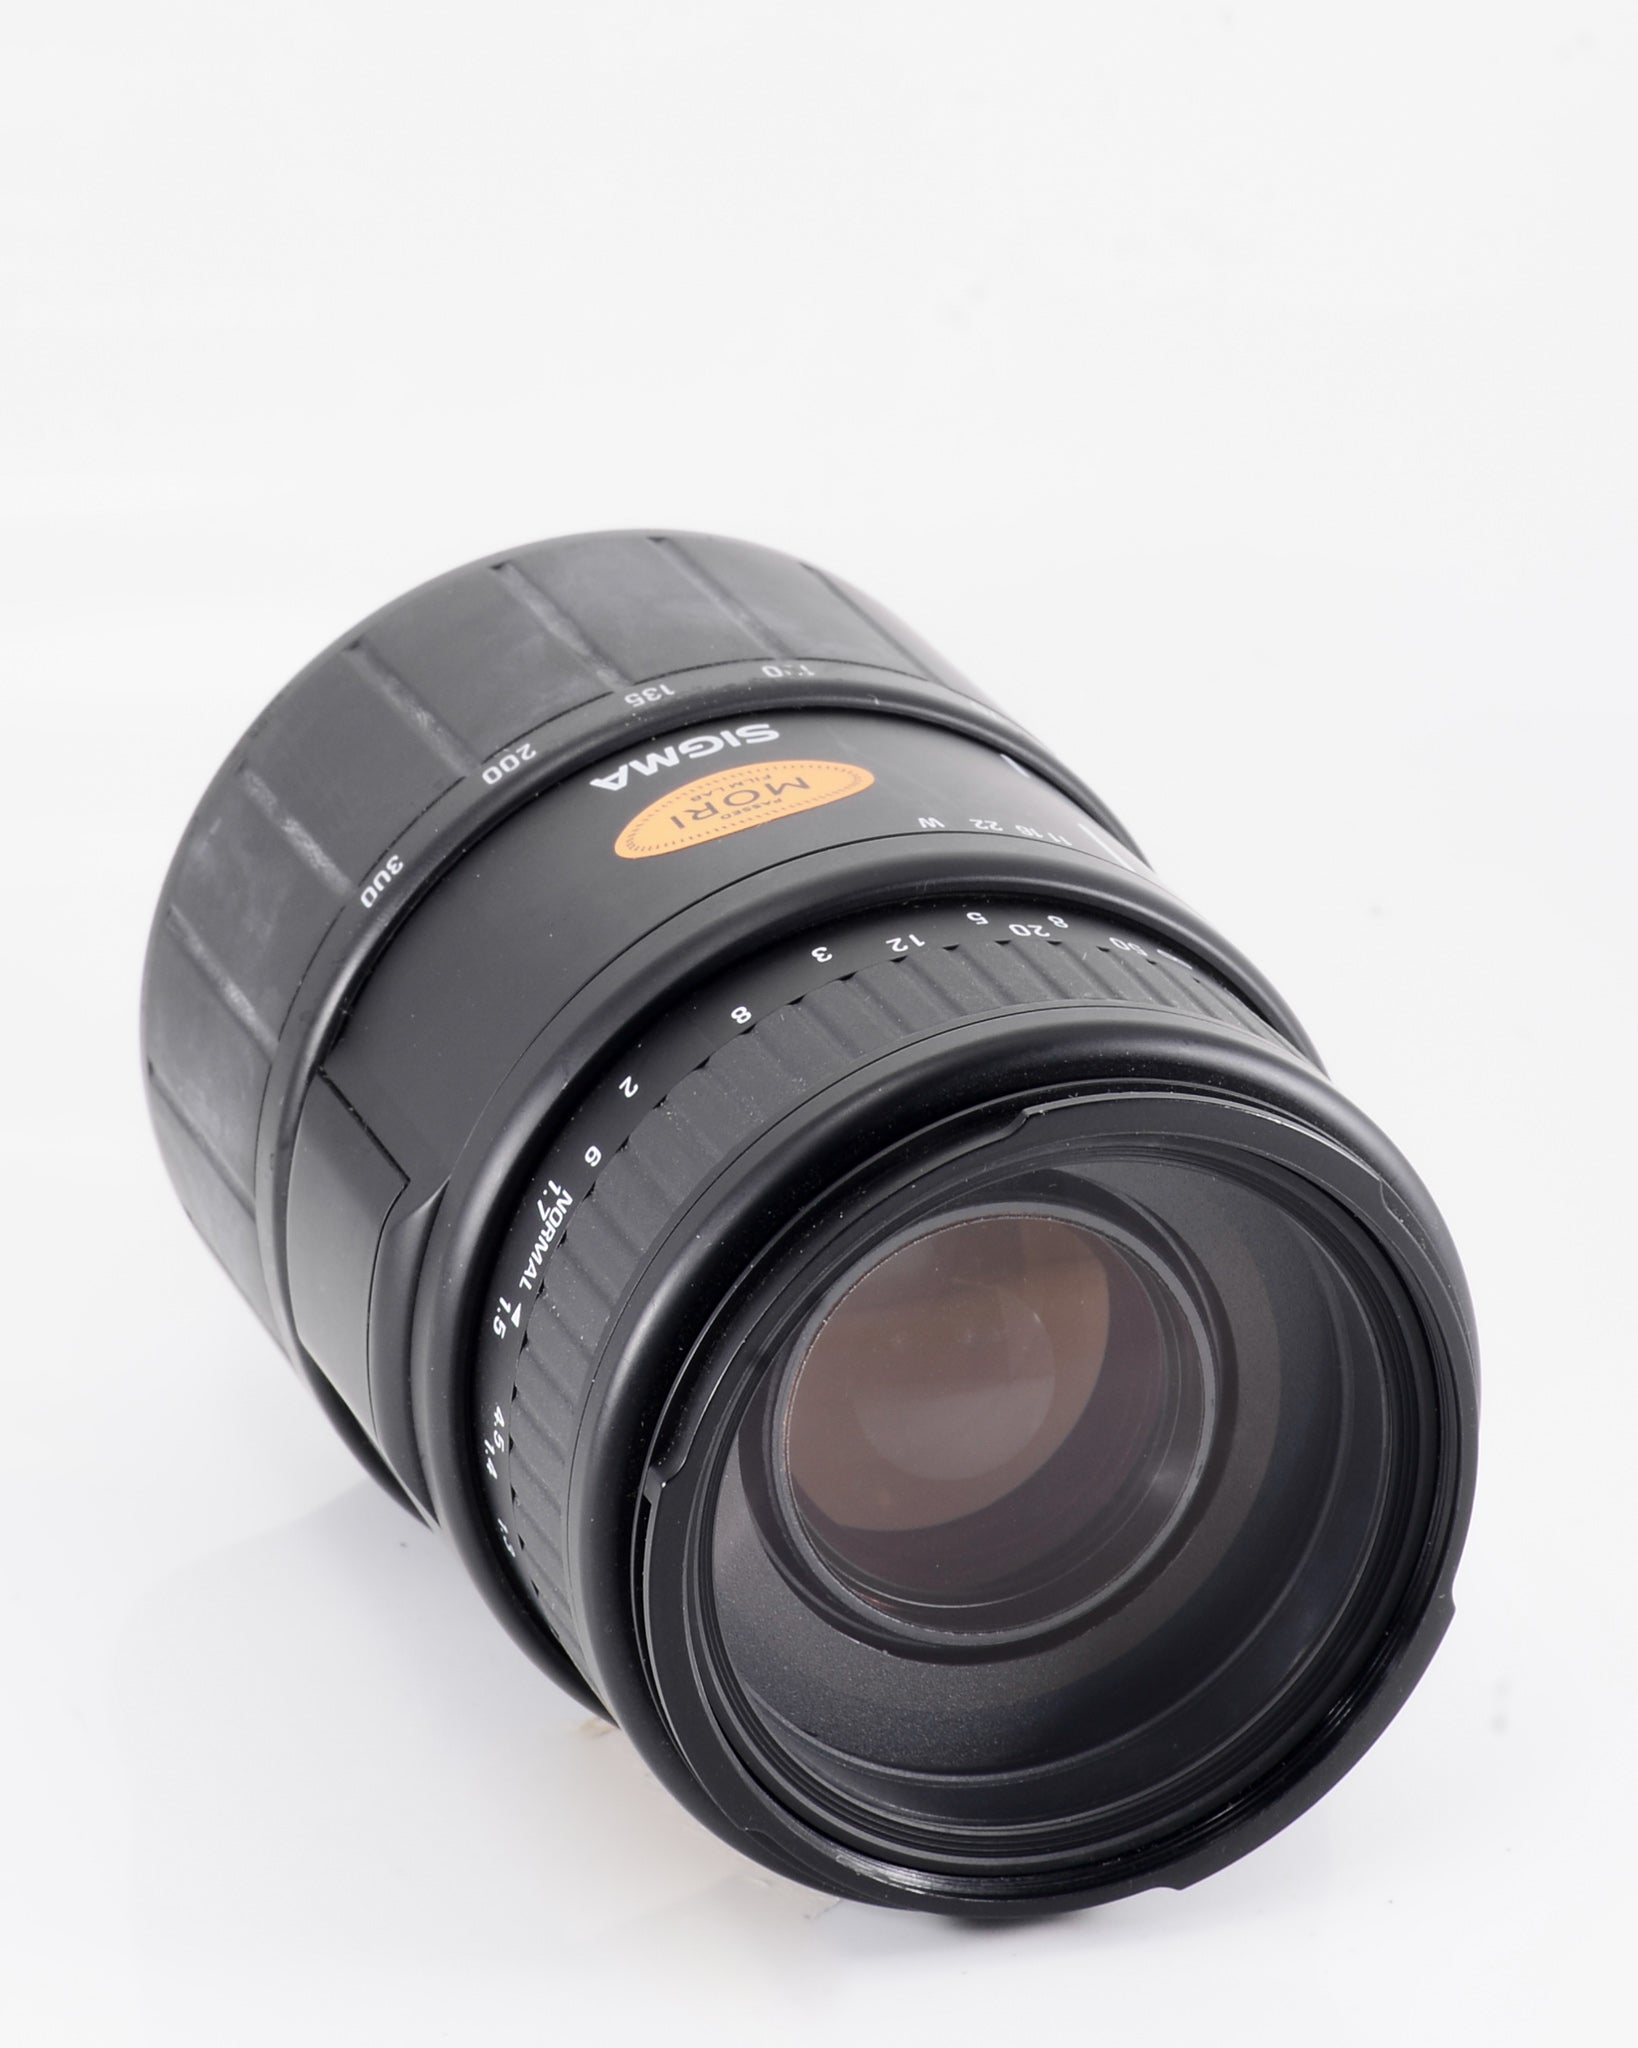 Sigma 70-300mm f4-5.6 PK lens